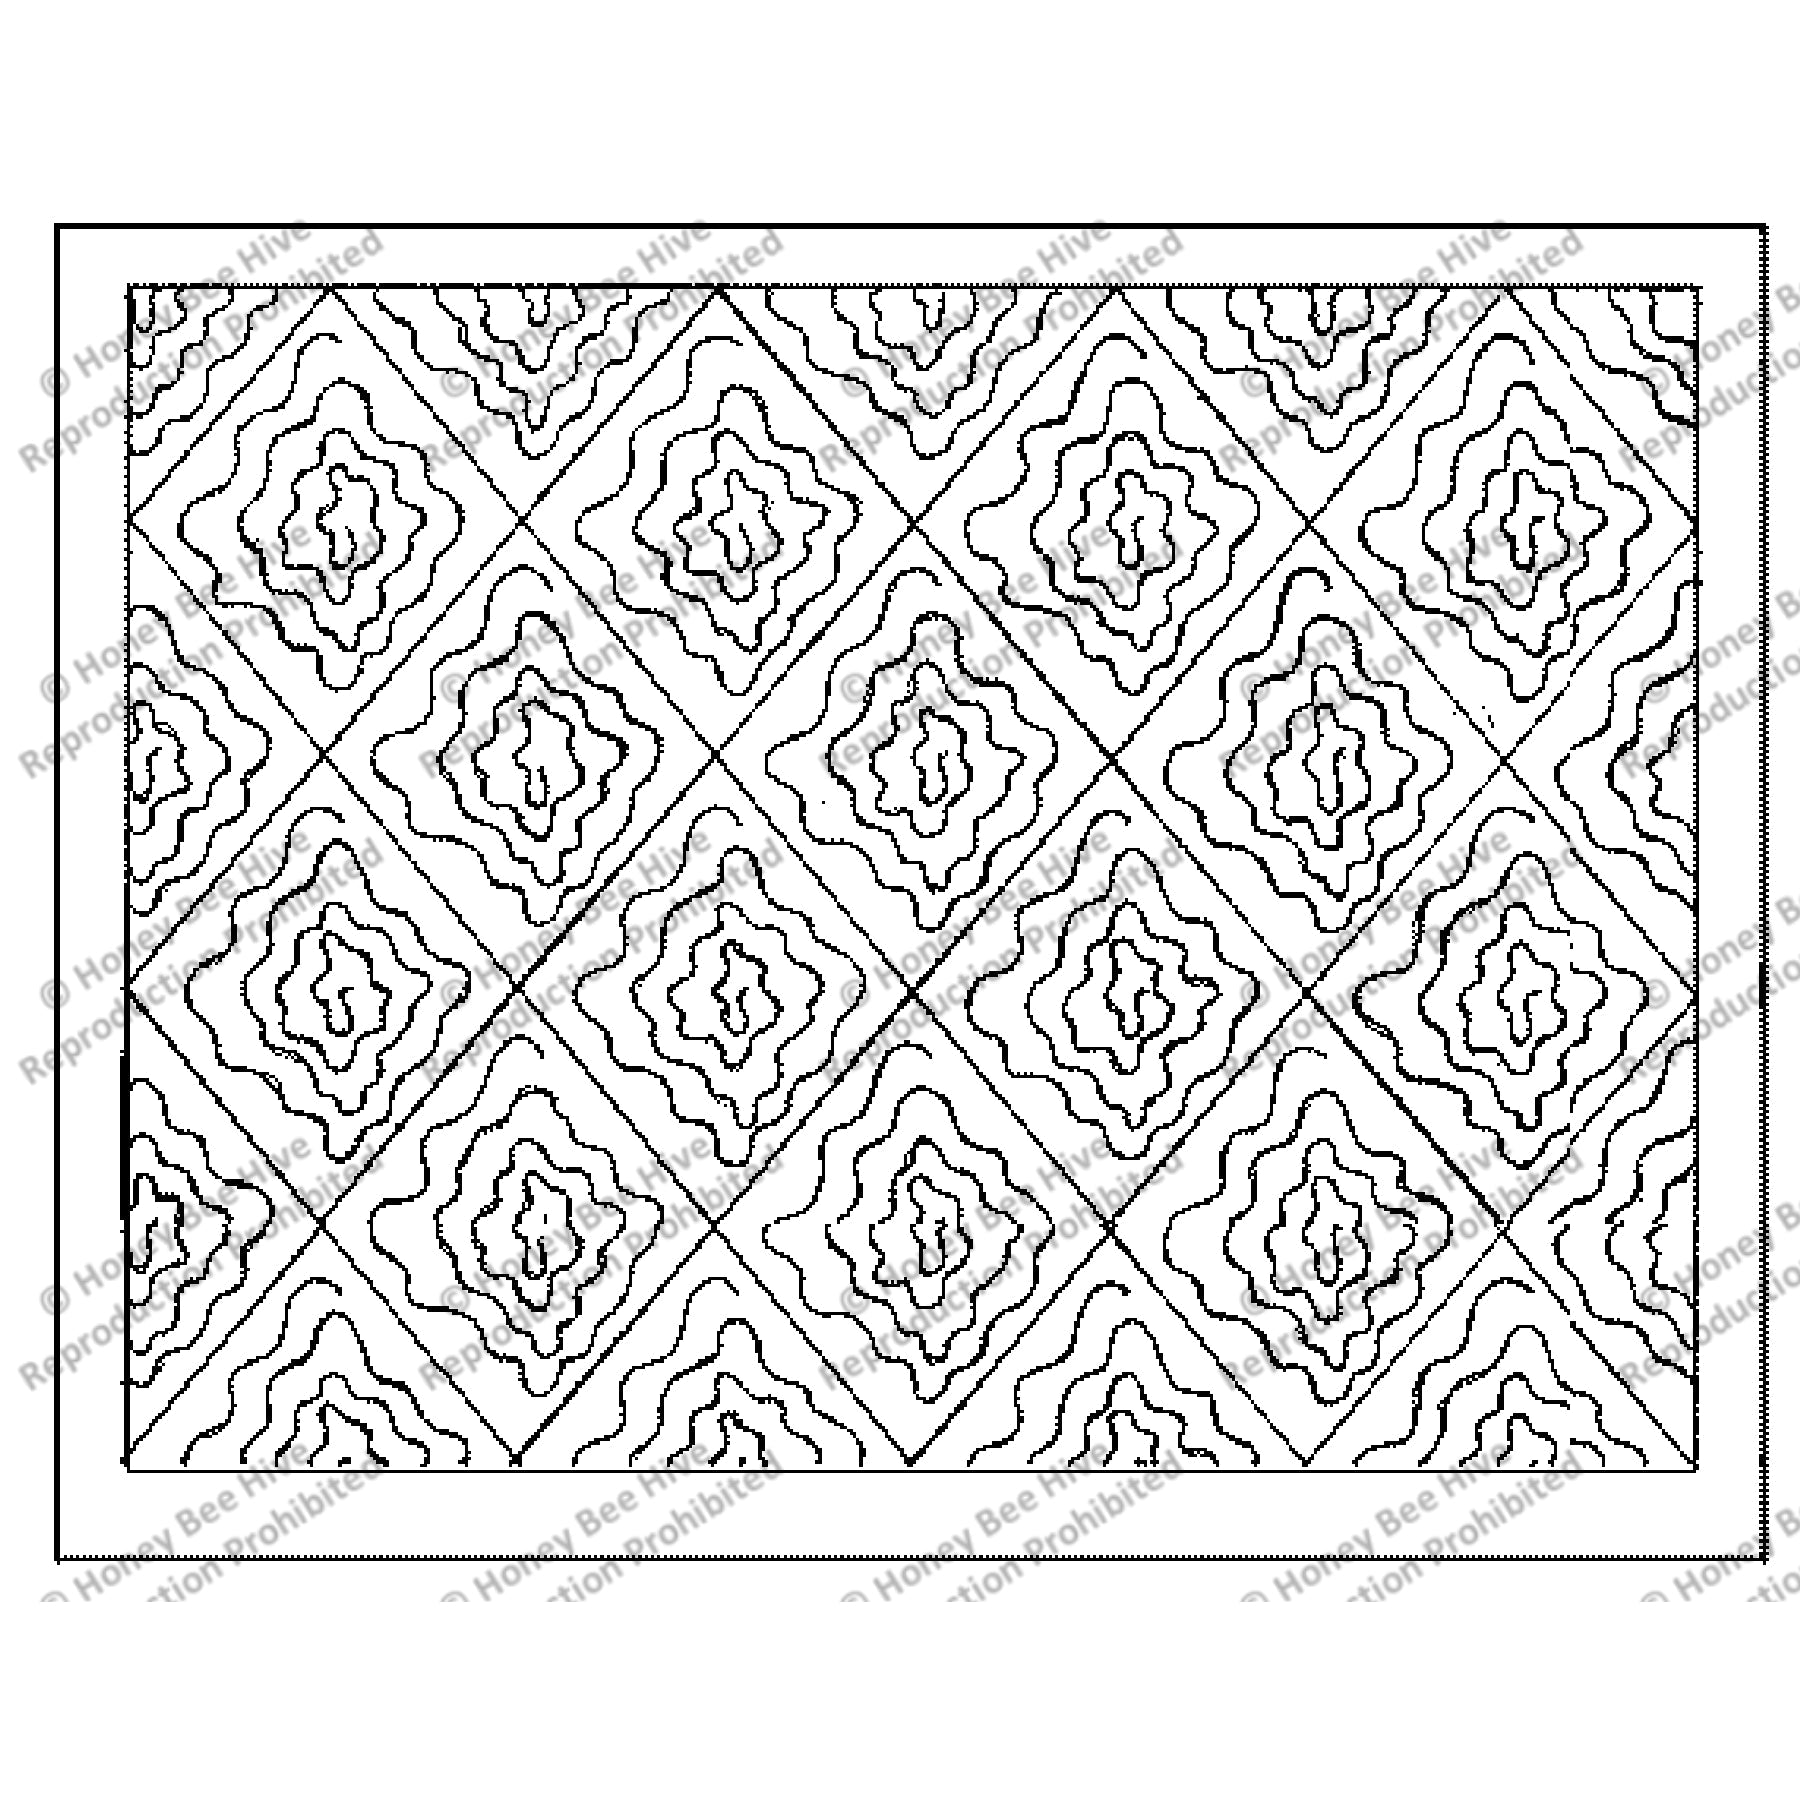 Quaint, rug hooking pattern